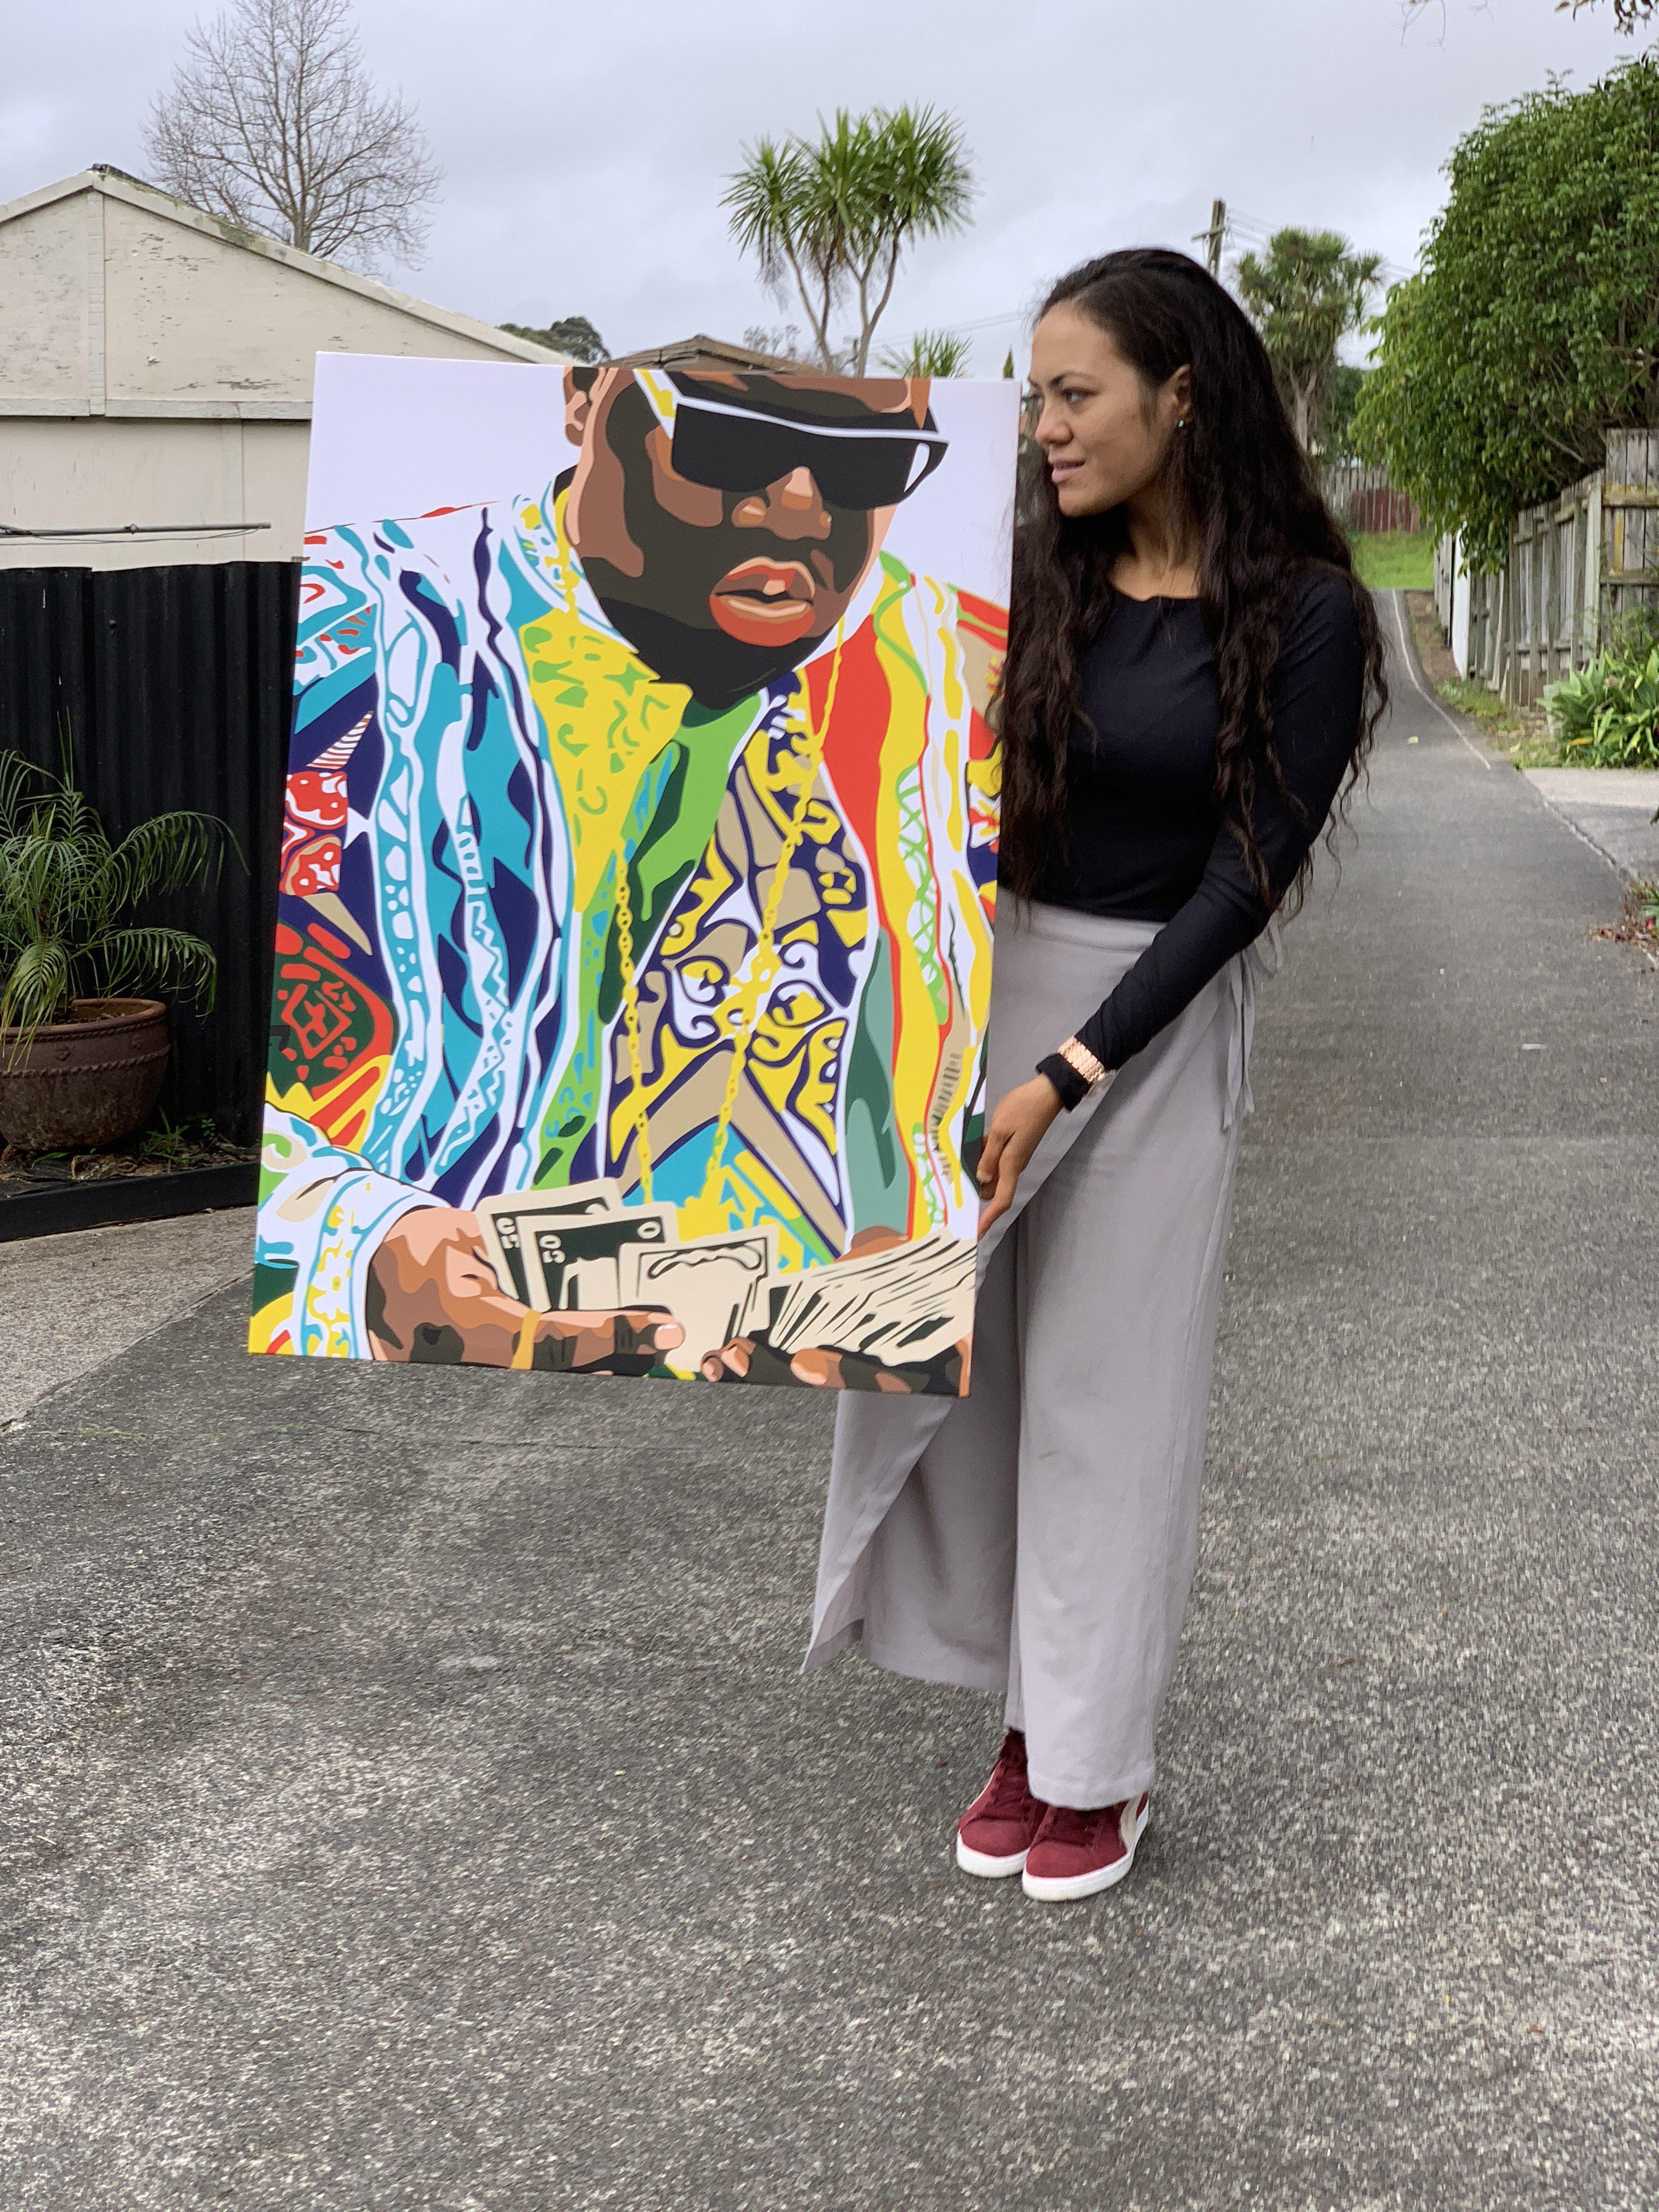 Biggie 'Get Money' Framed Art Canvas - Poster Prints NZ